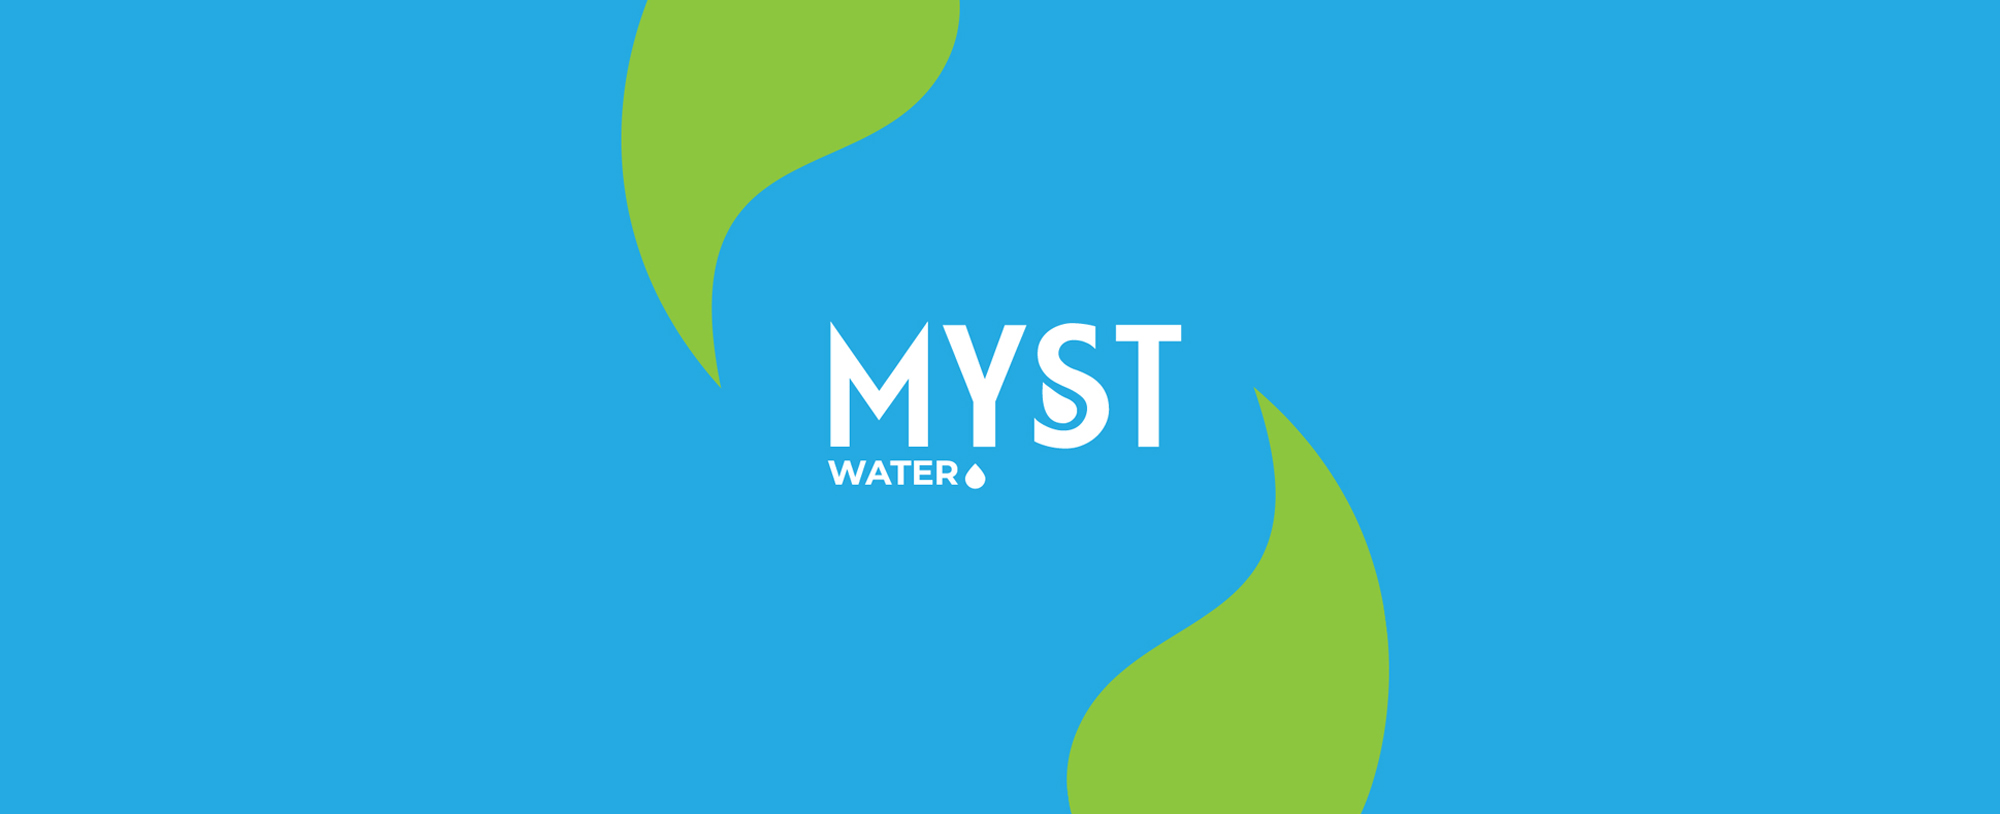 Myst-logo-design